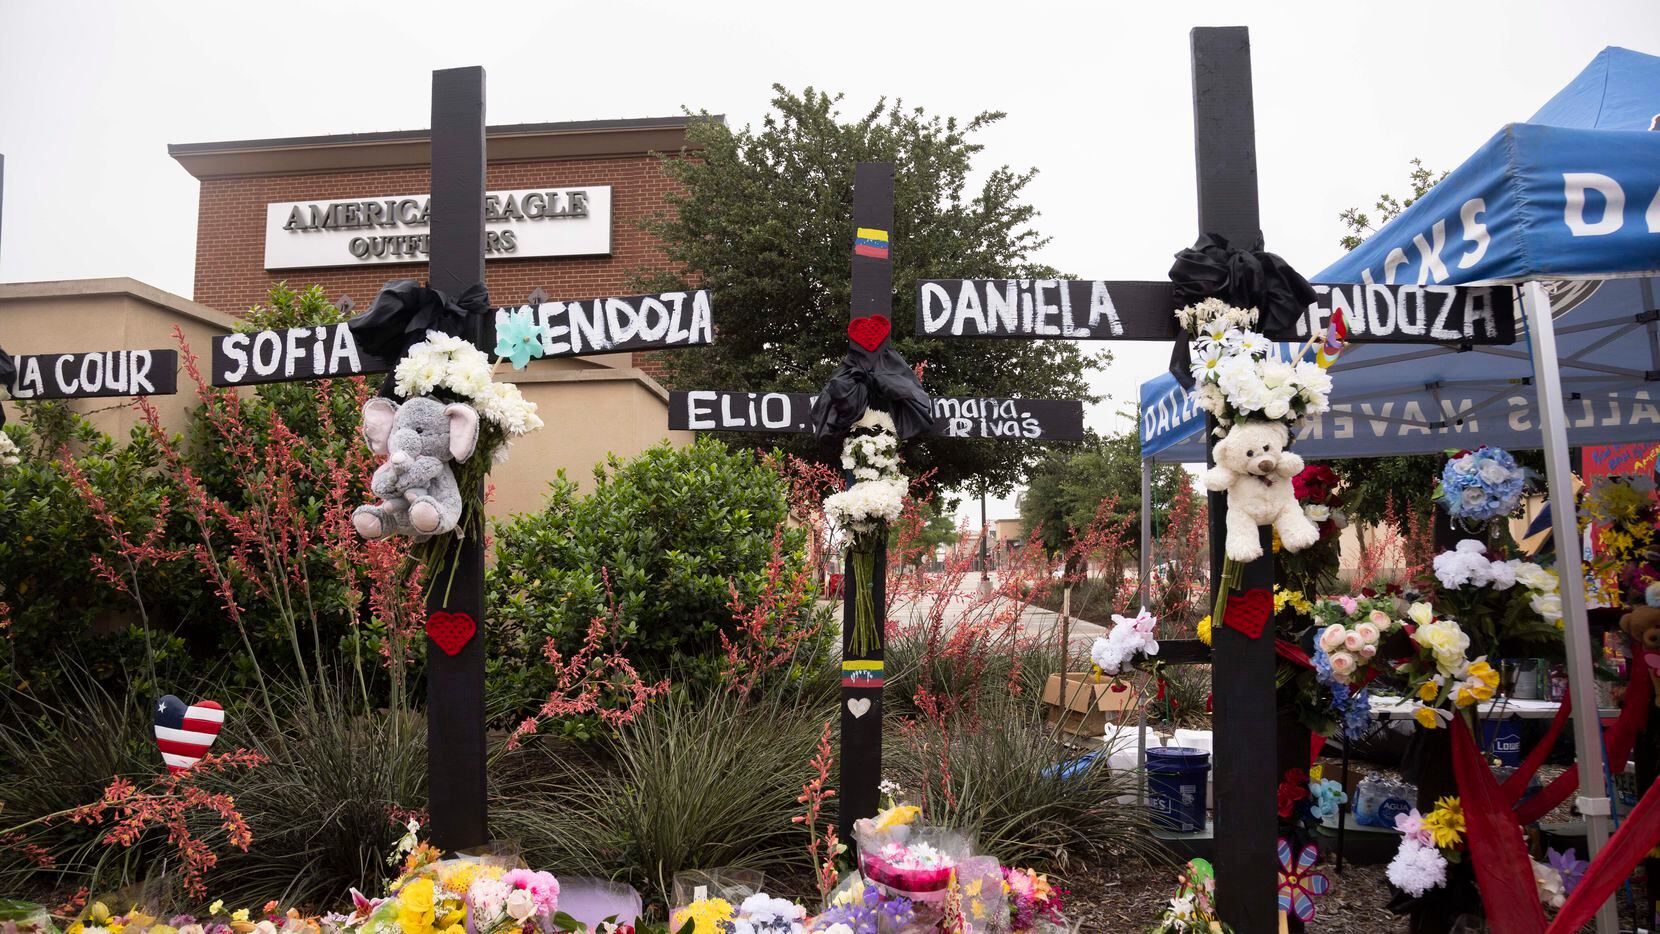 Crosses include the names of Sofia Mendoza, Elio Cumana-Rivas and Daniela Mendoza, three of...